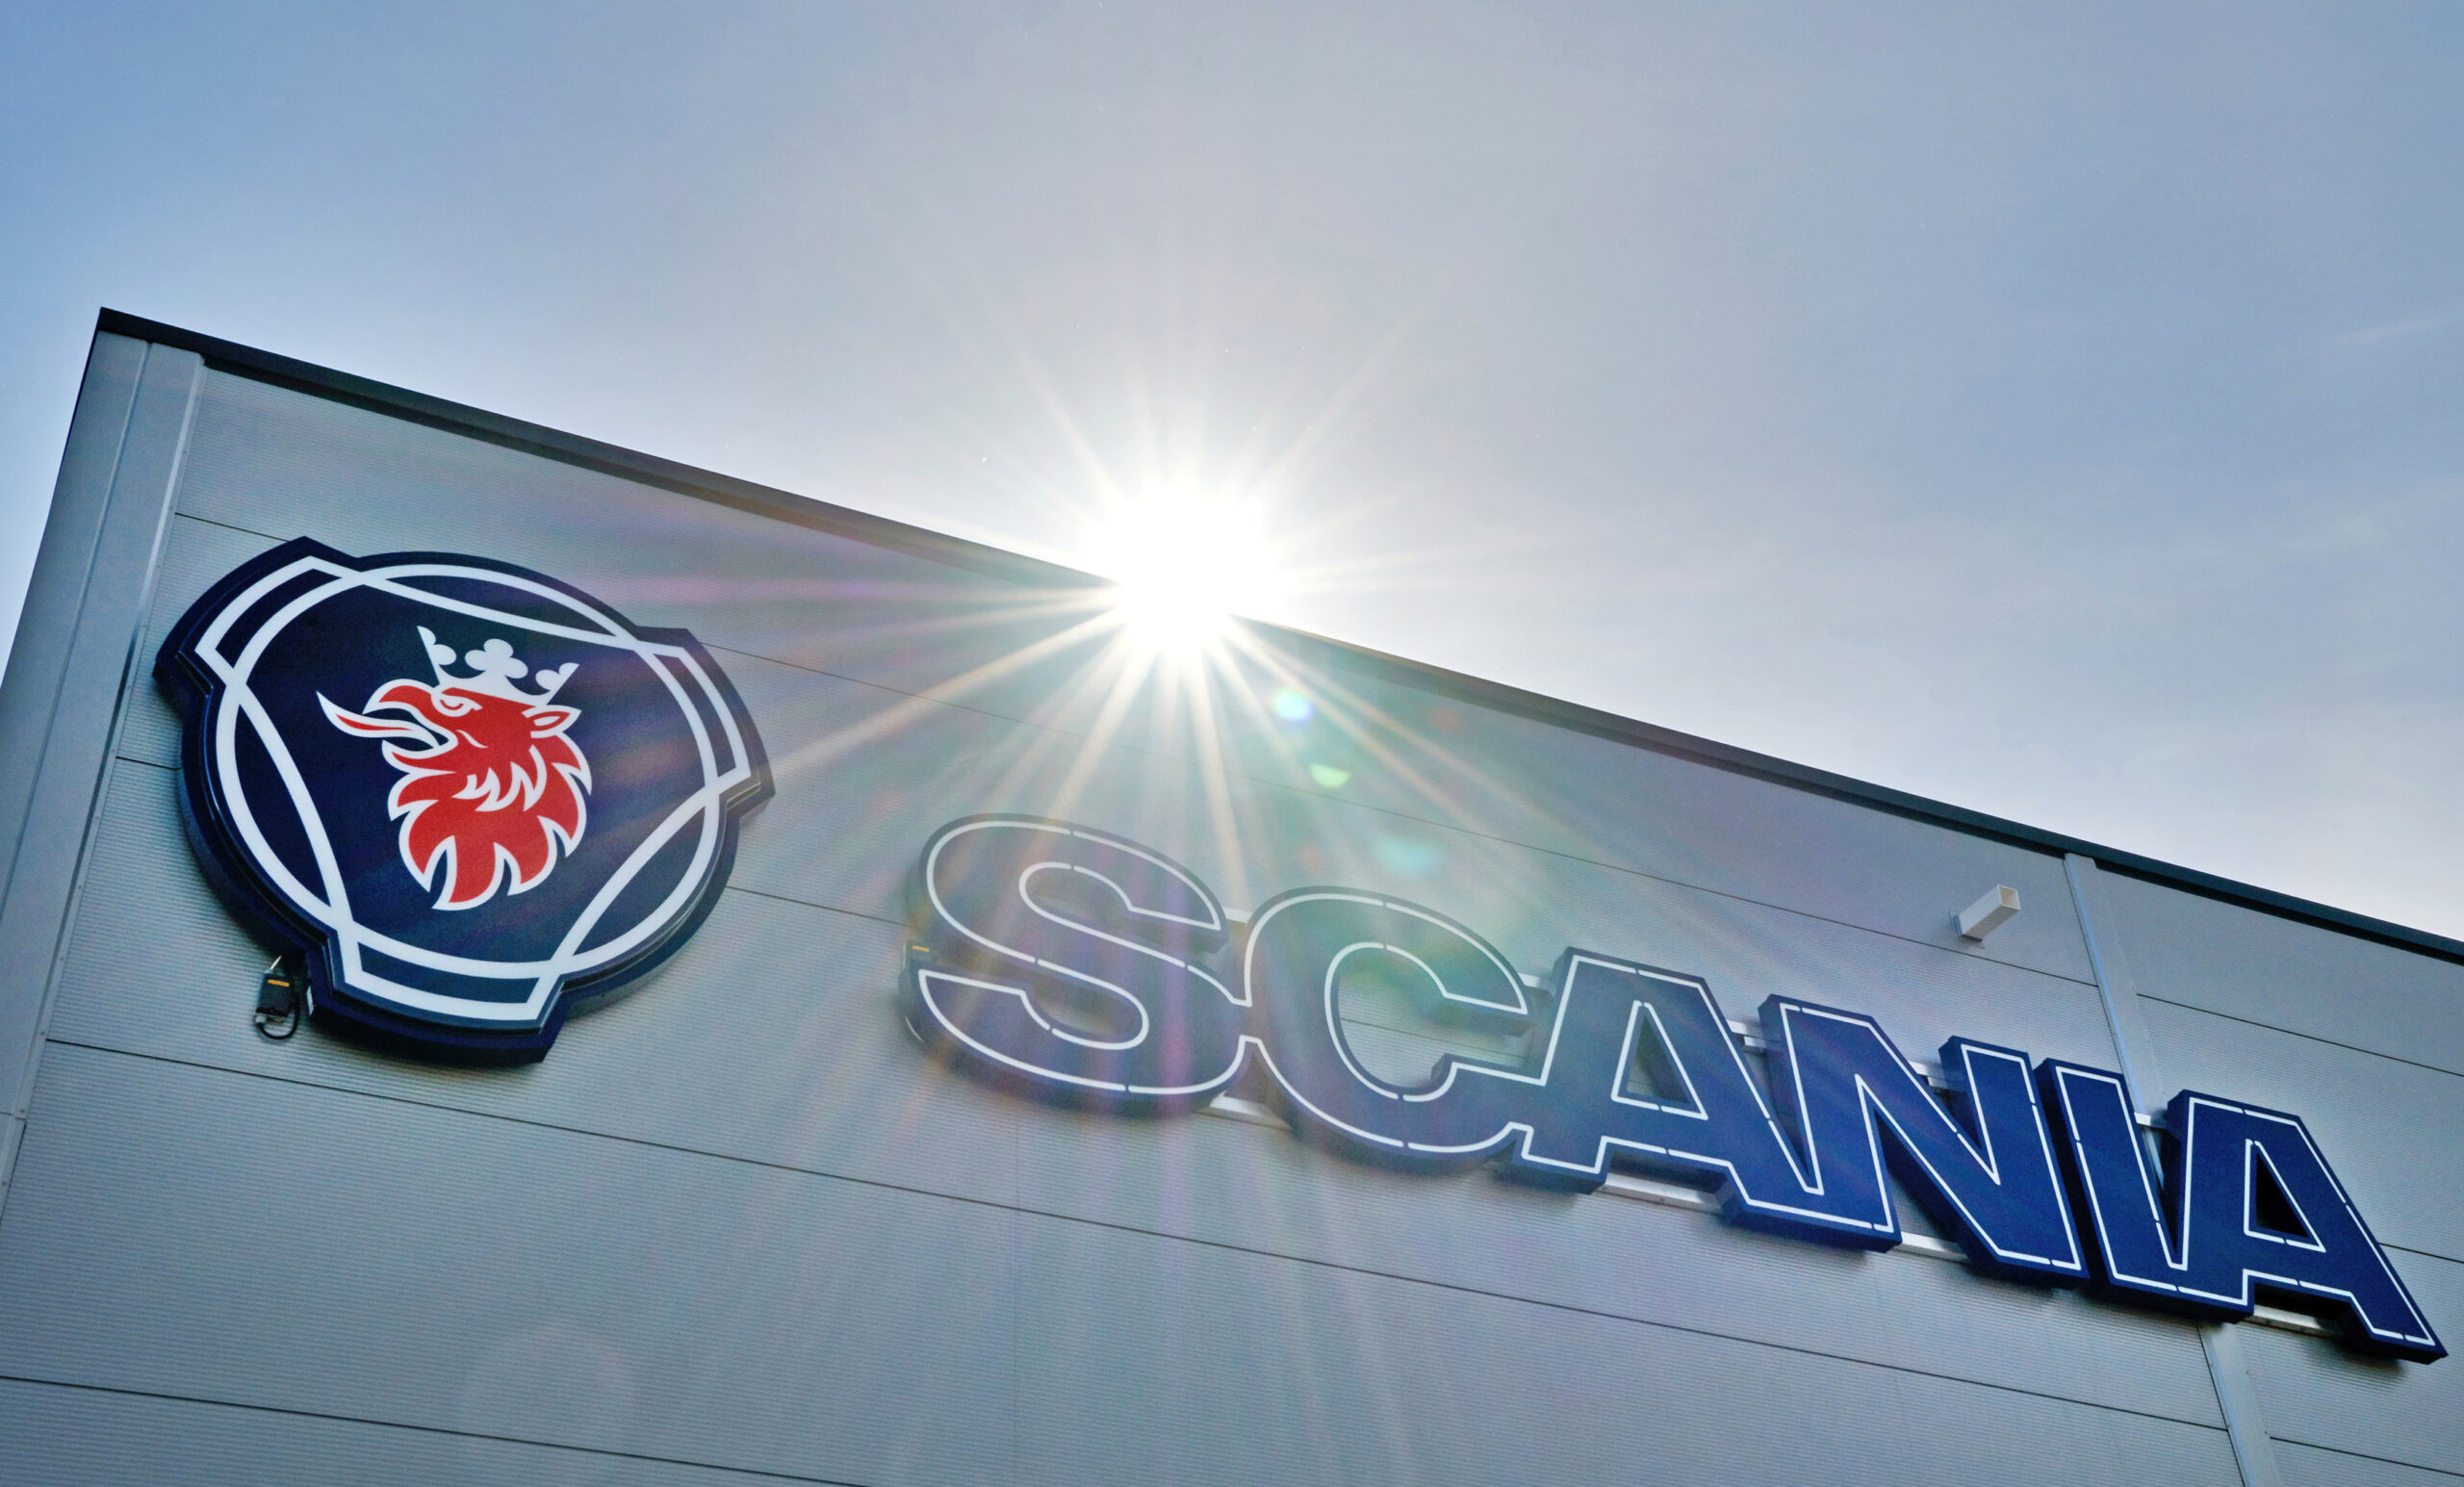 Scania fasad logotyp